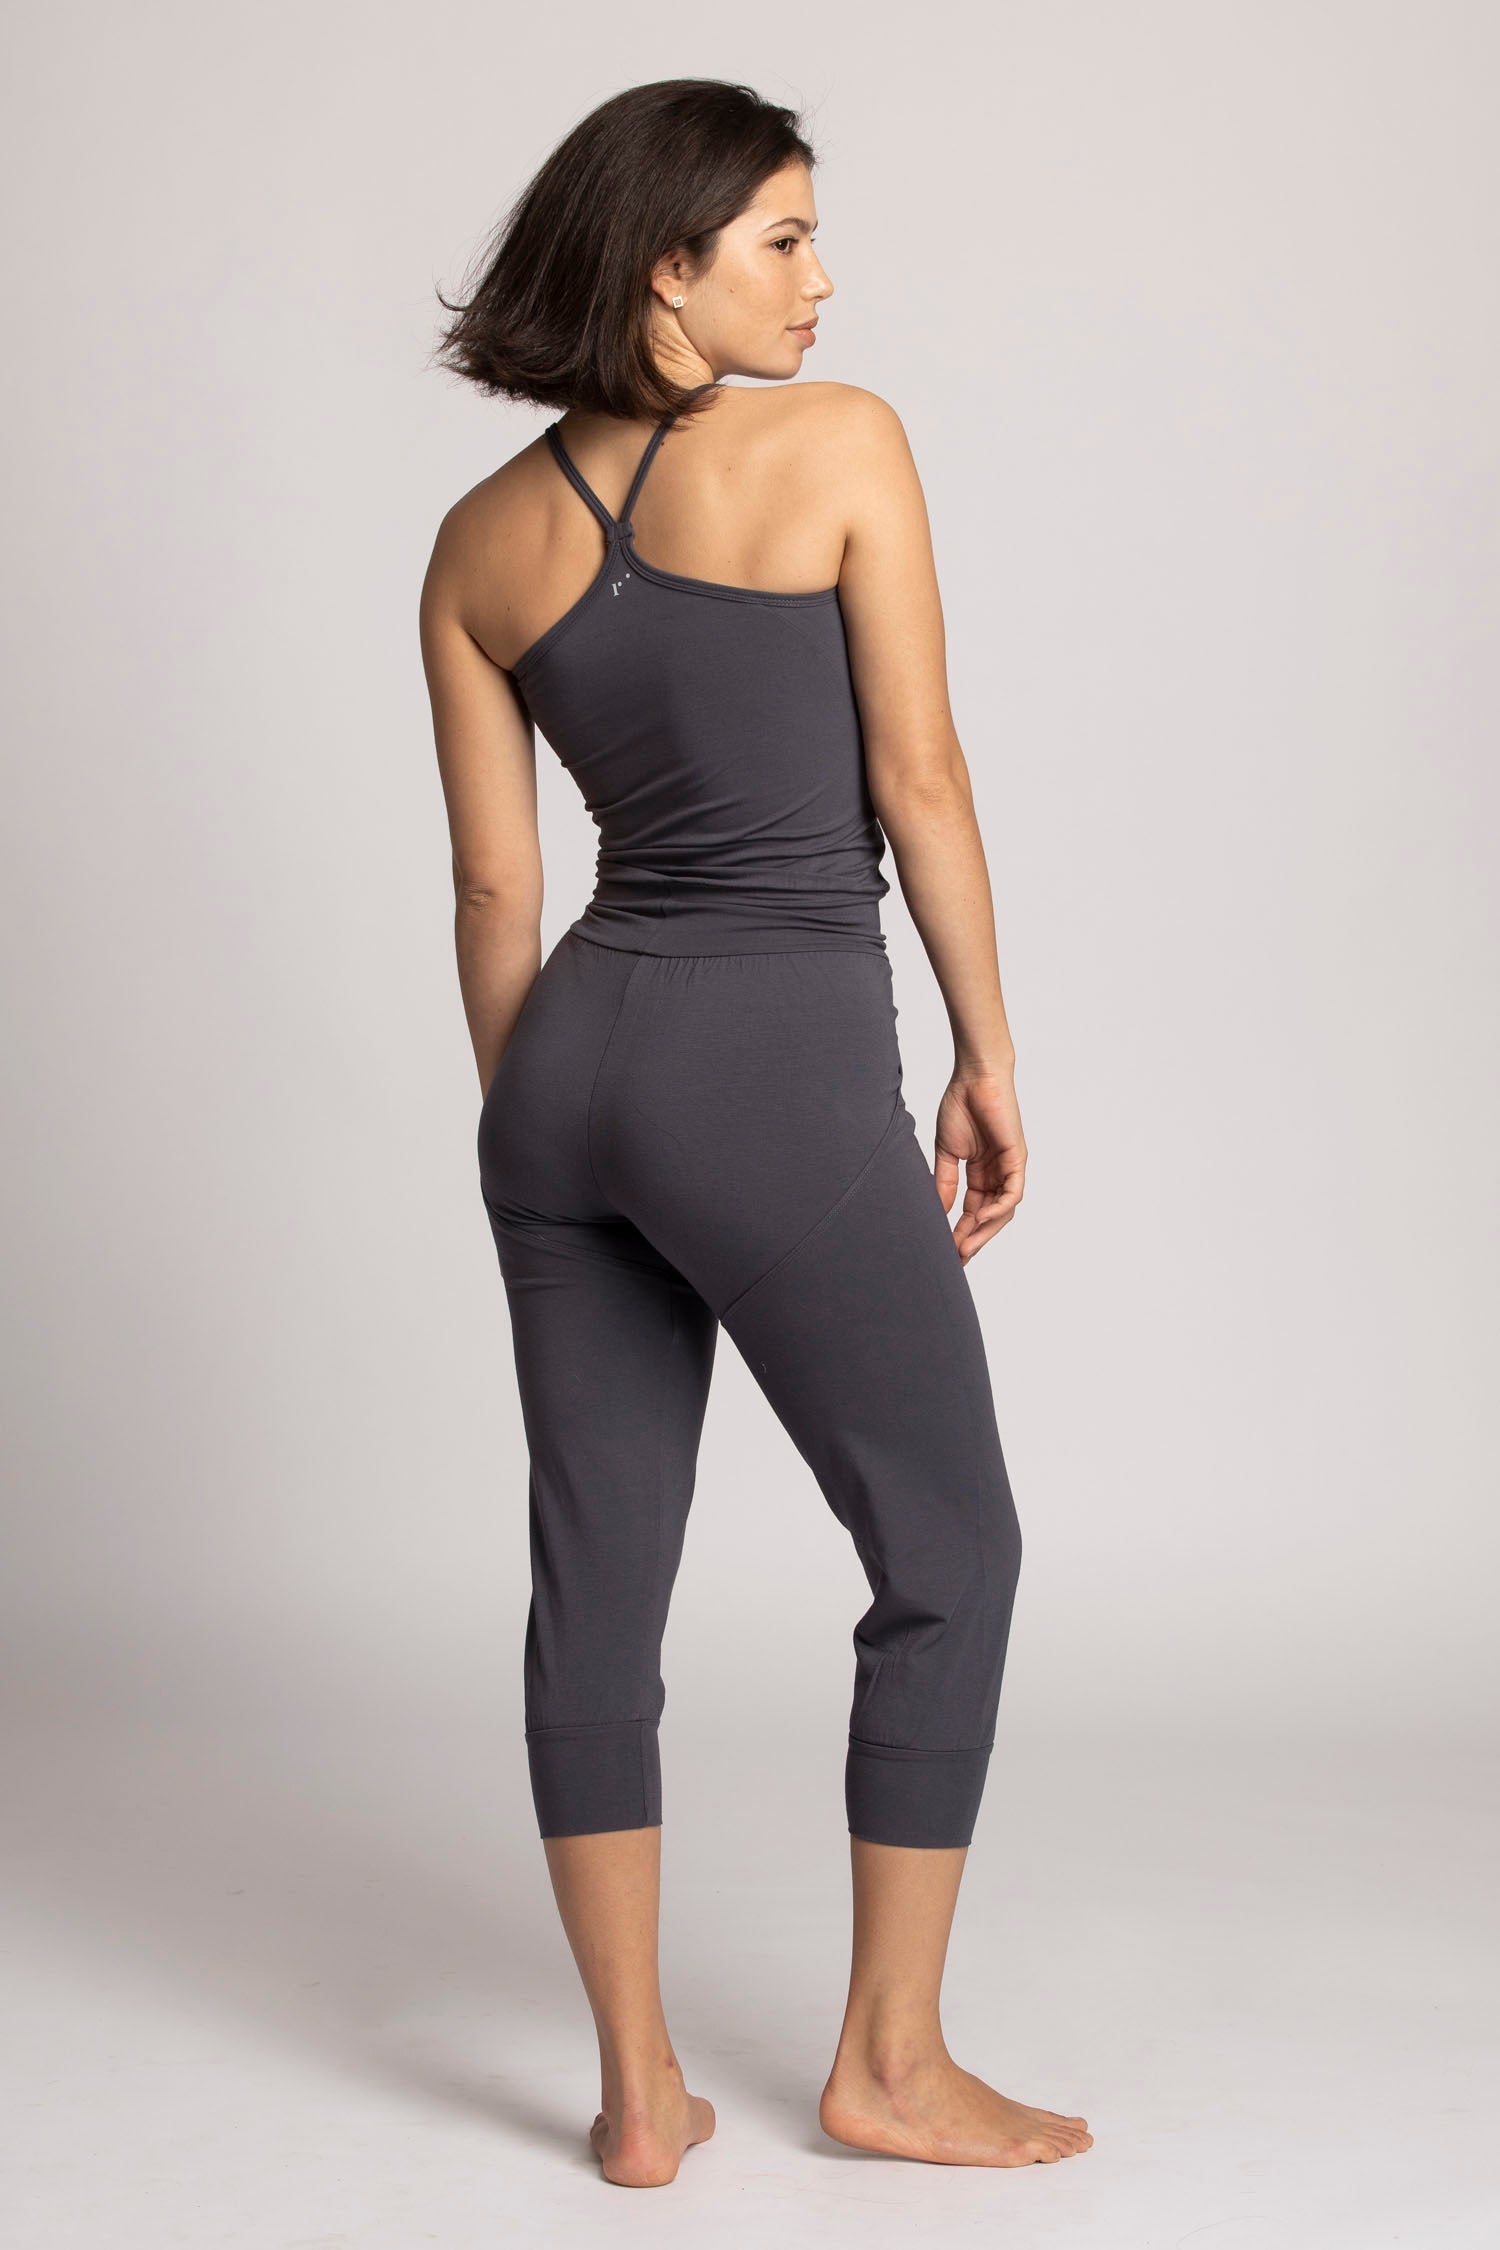 Yoga Jumpsuit womens clothing Ripple Yoga Wear steel XS 